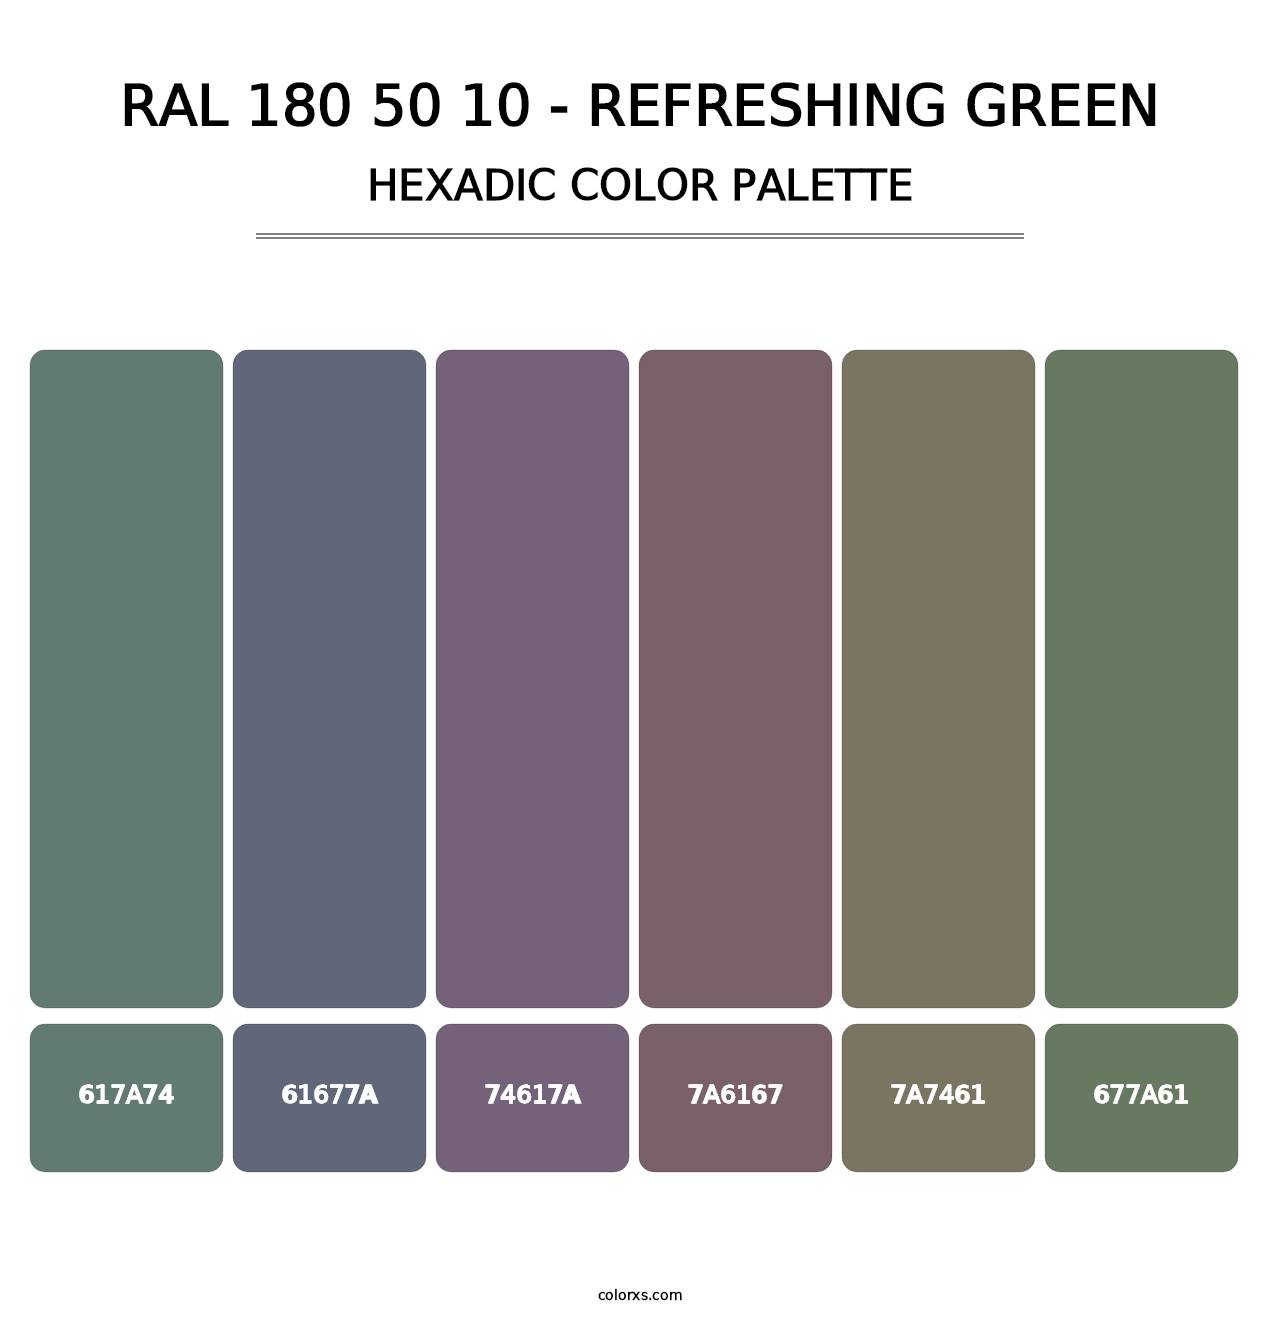 RAL 180 50 10 - Refreshing Green - Hexadic Color Palette